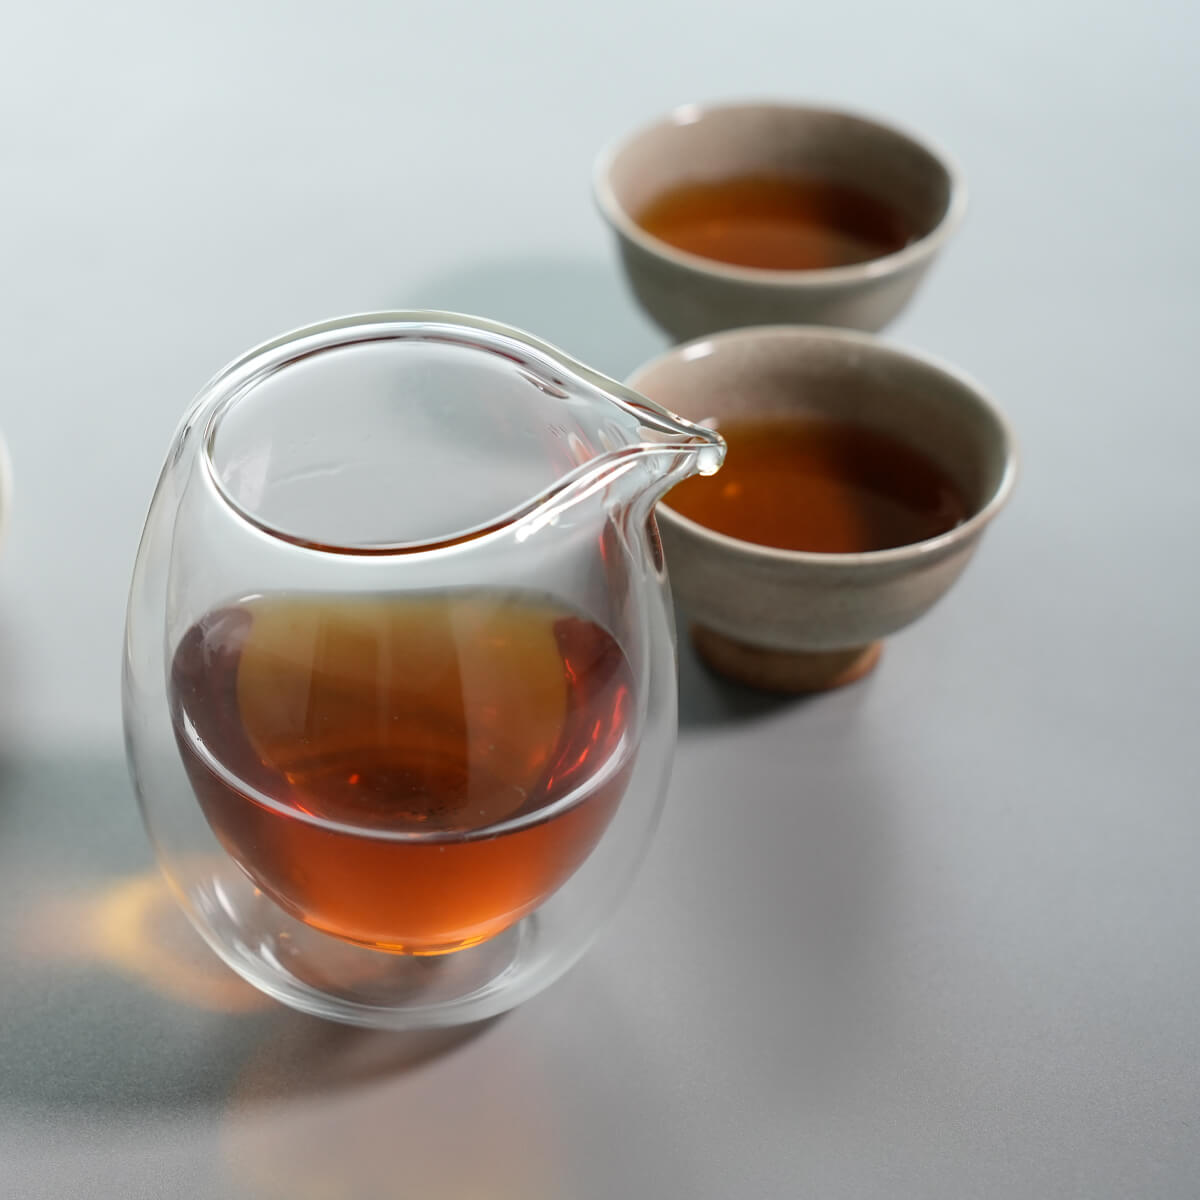 Yunnan-Black-Tea-Enjoy-tea-time